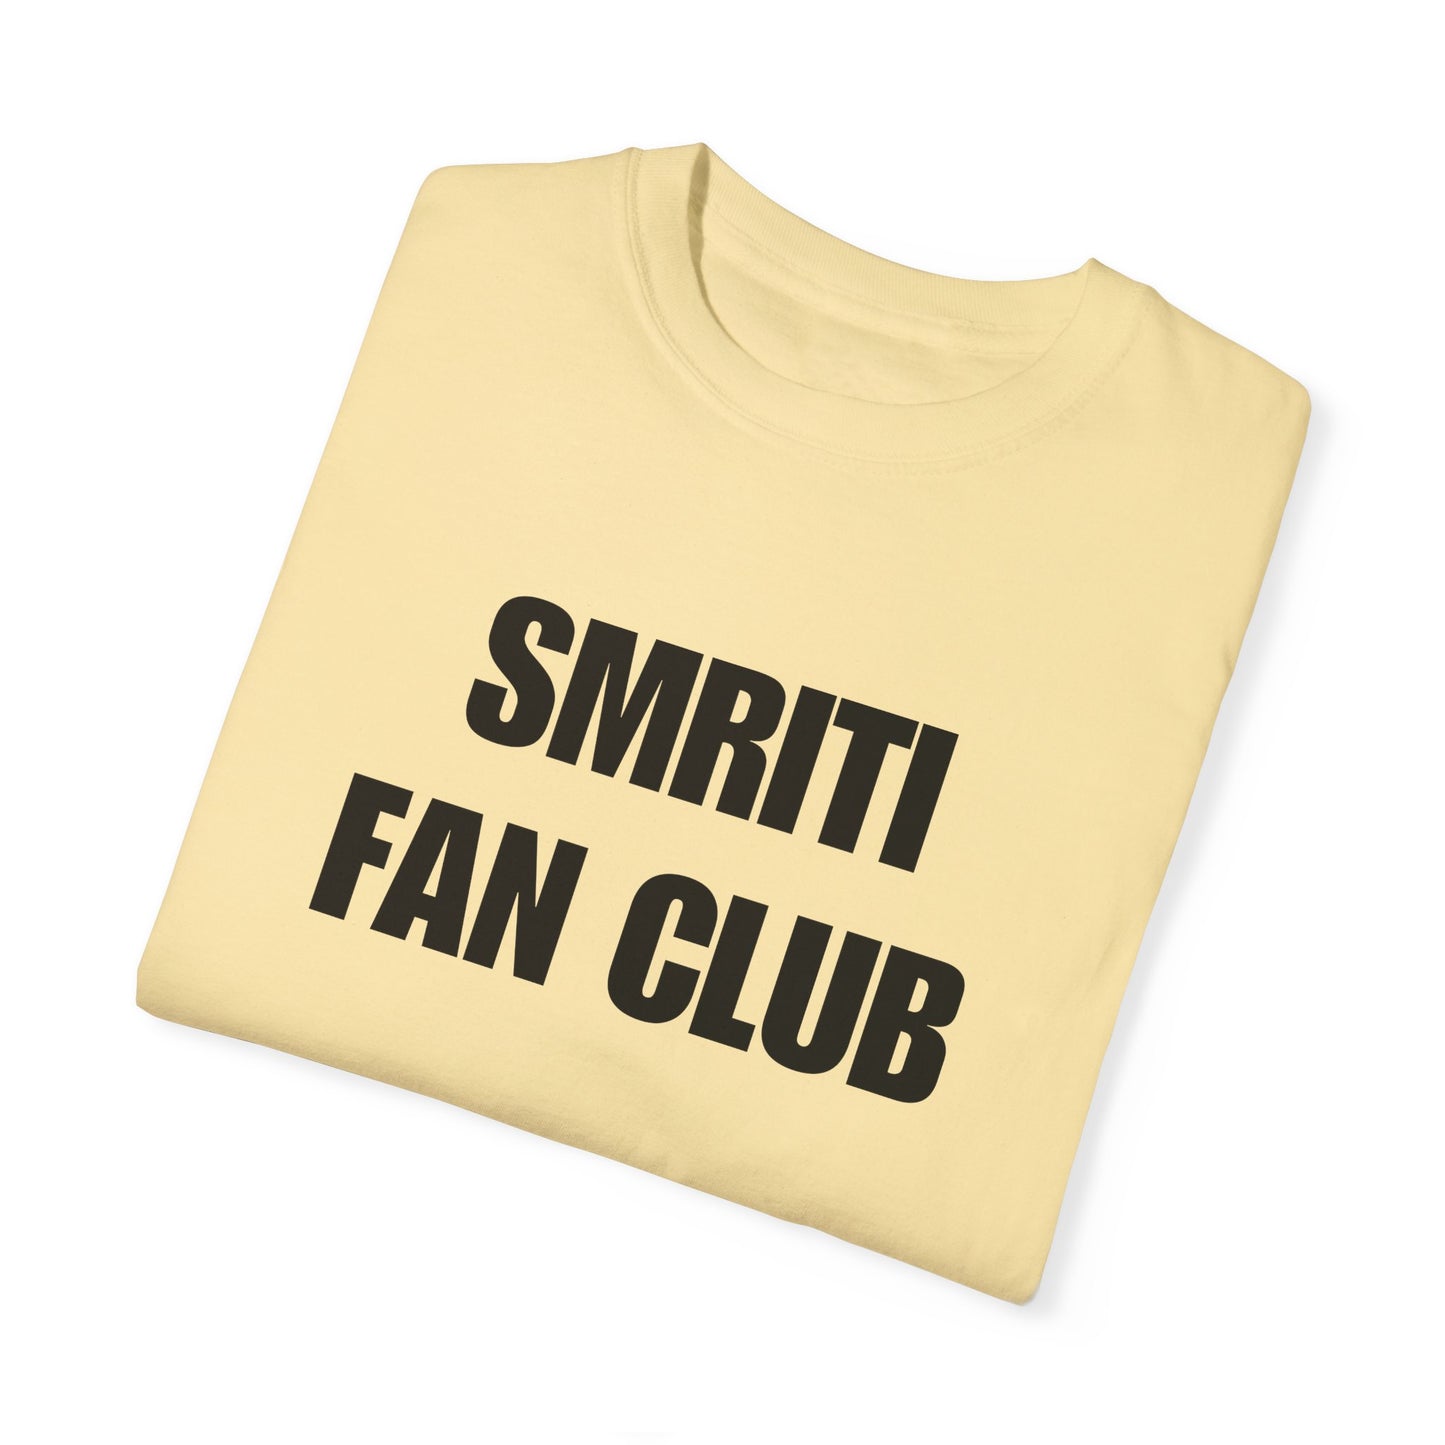 Smriti Fan Club T-Shirt